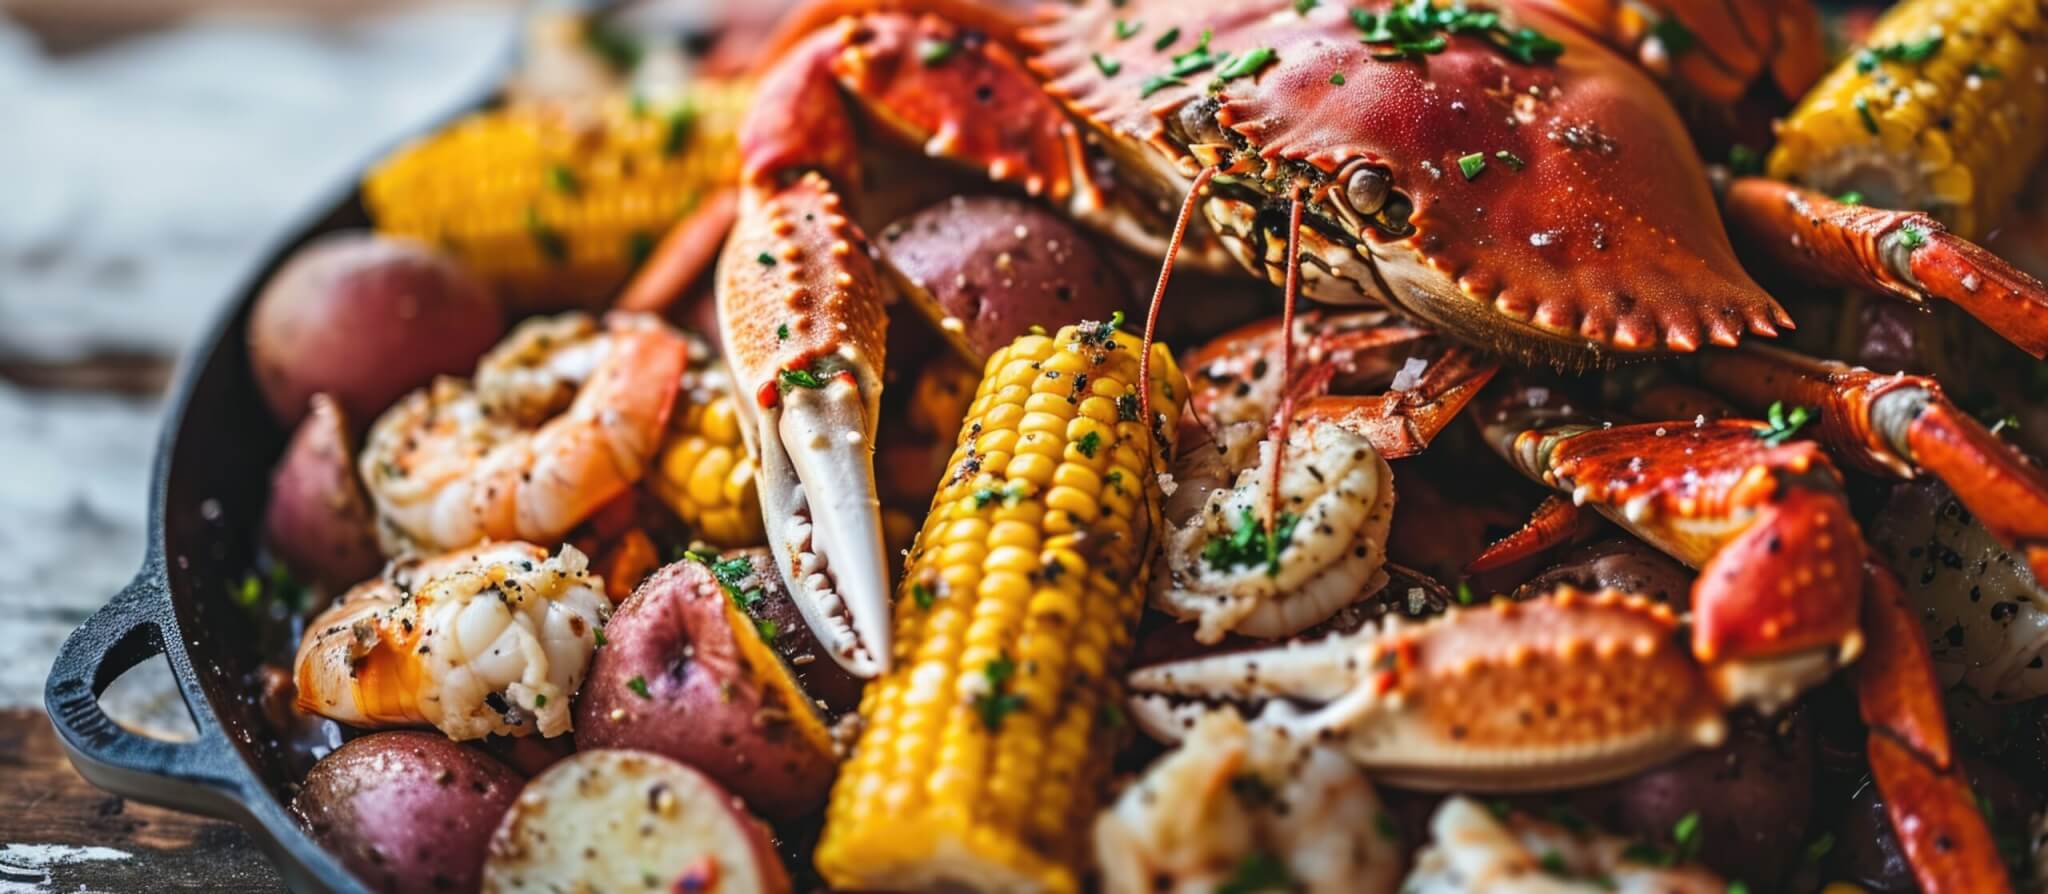 Southern garlic crab seafood boil with Alaskan crab legs, new potatoes, corn, and shrimp platter.